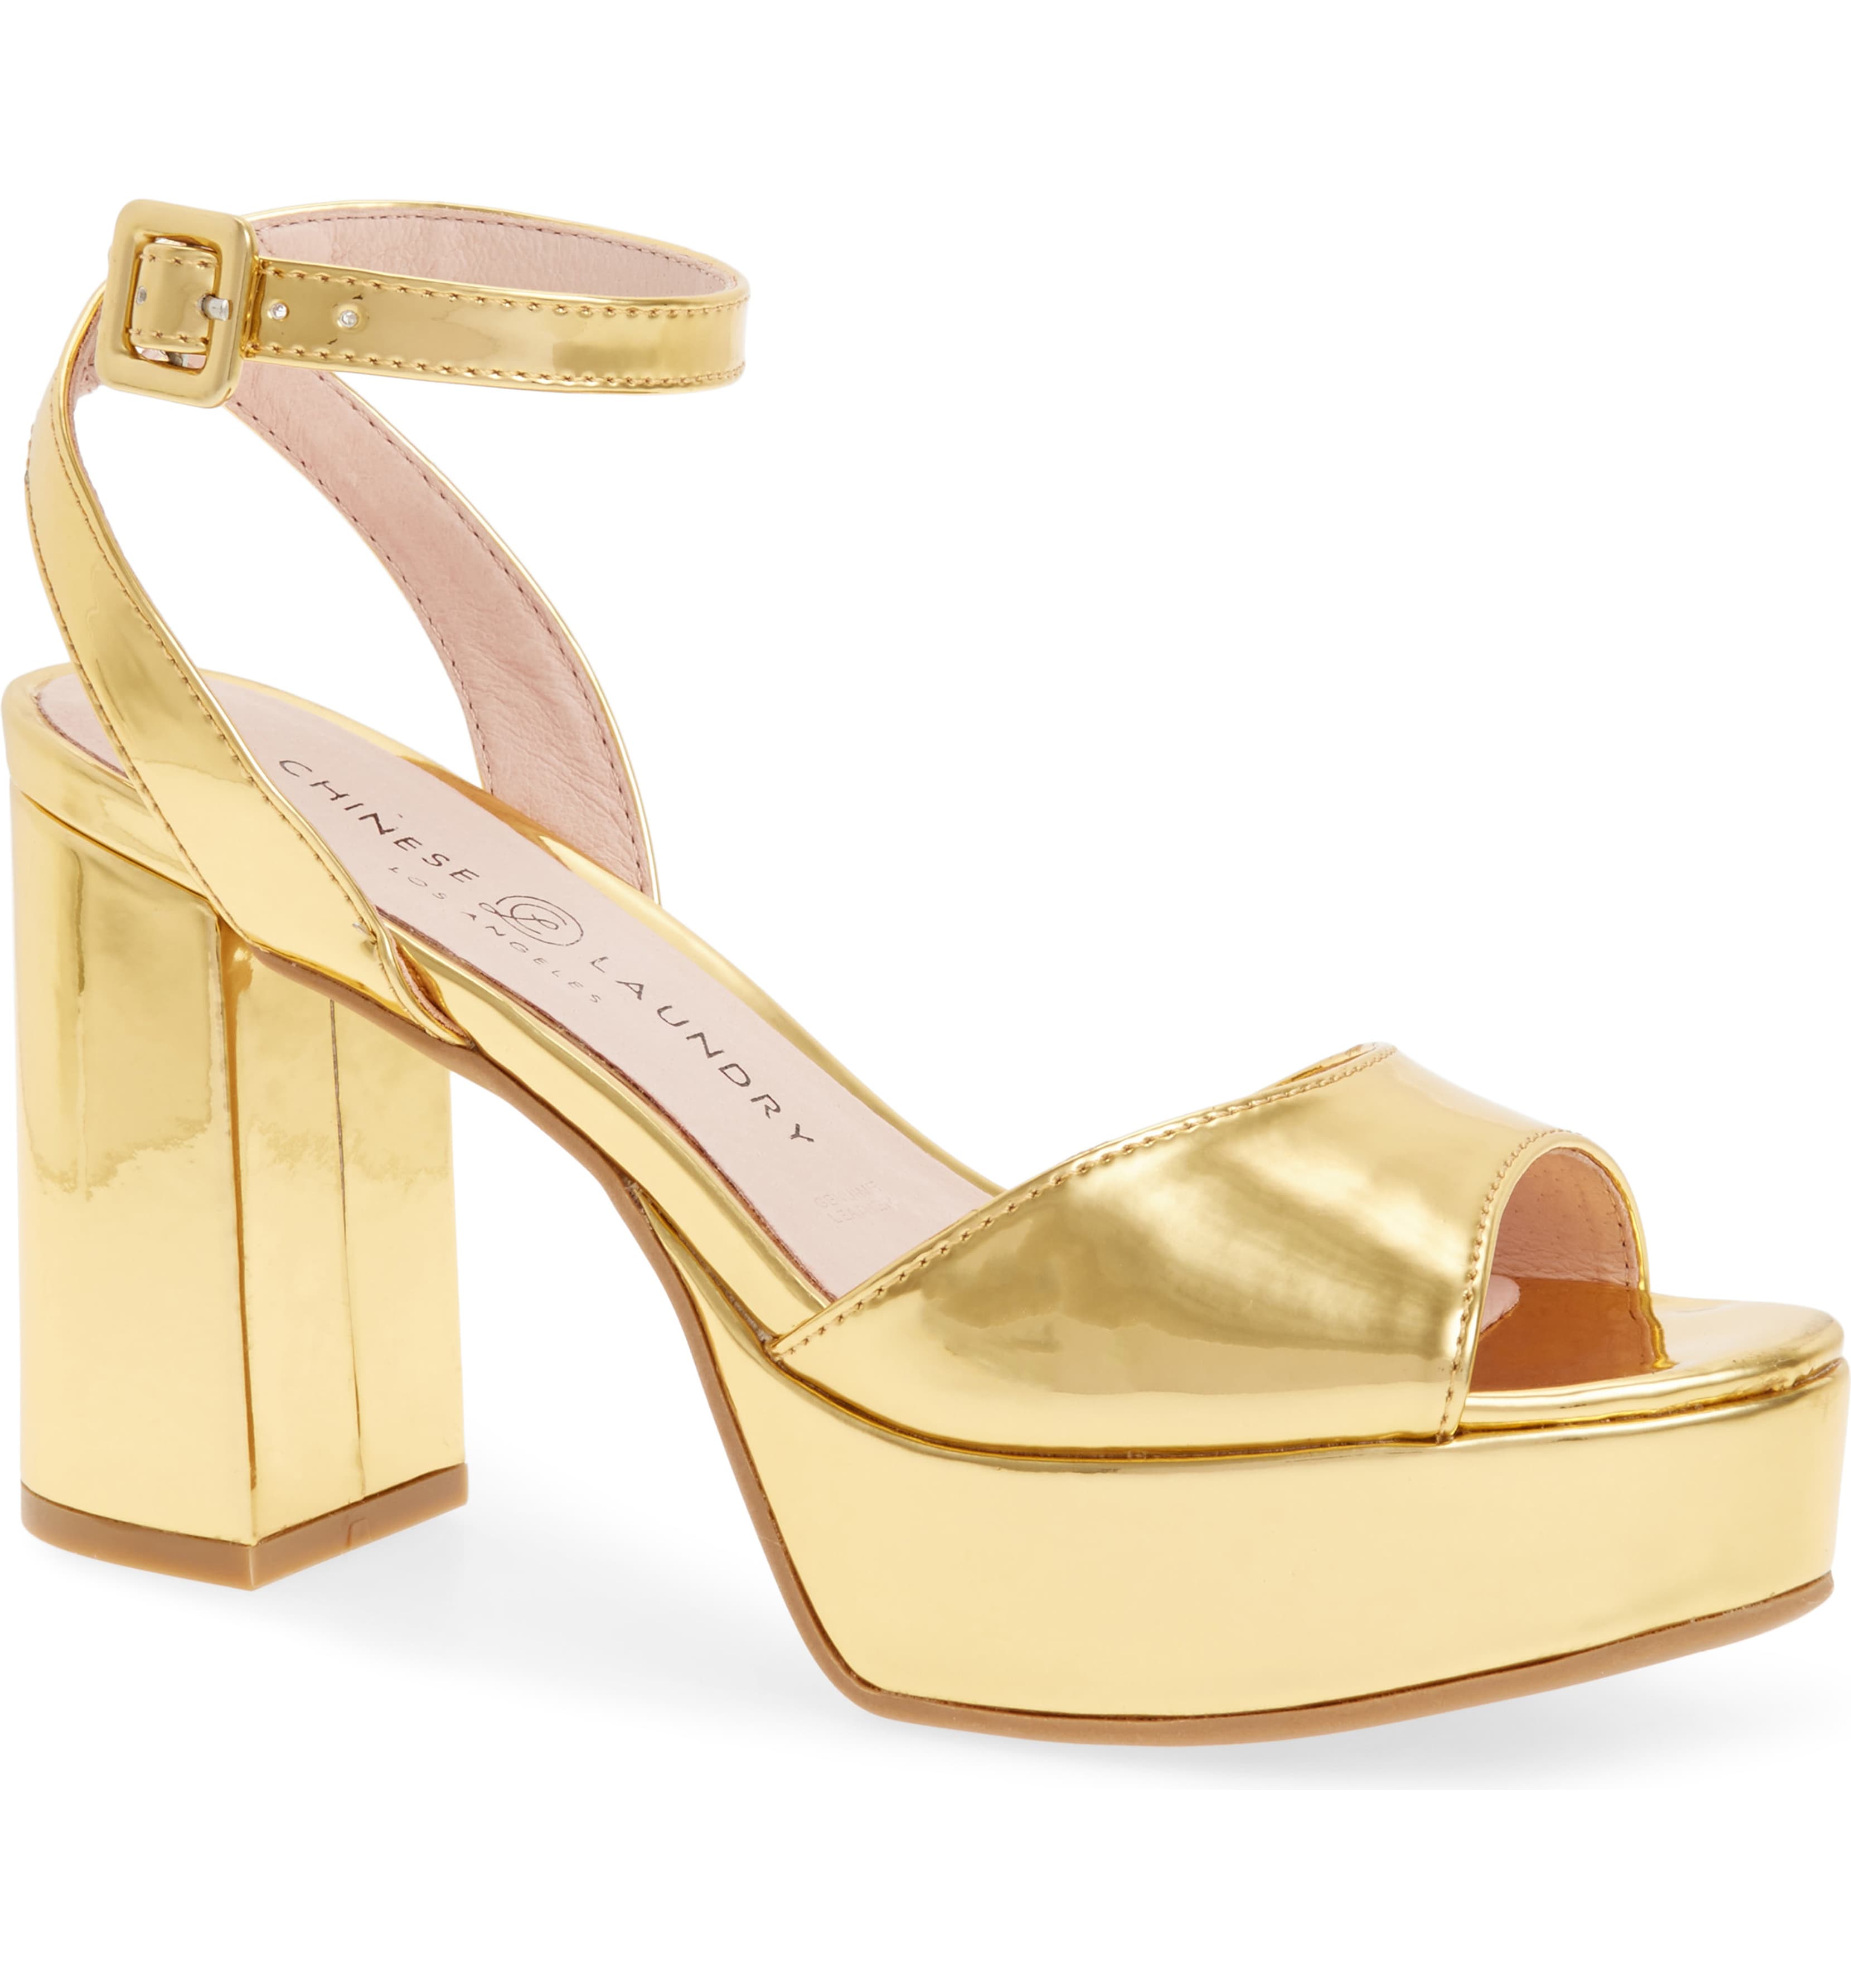 A gold colored platform shoe